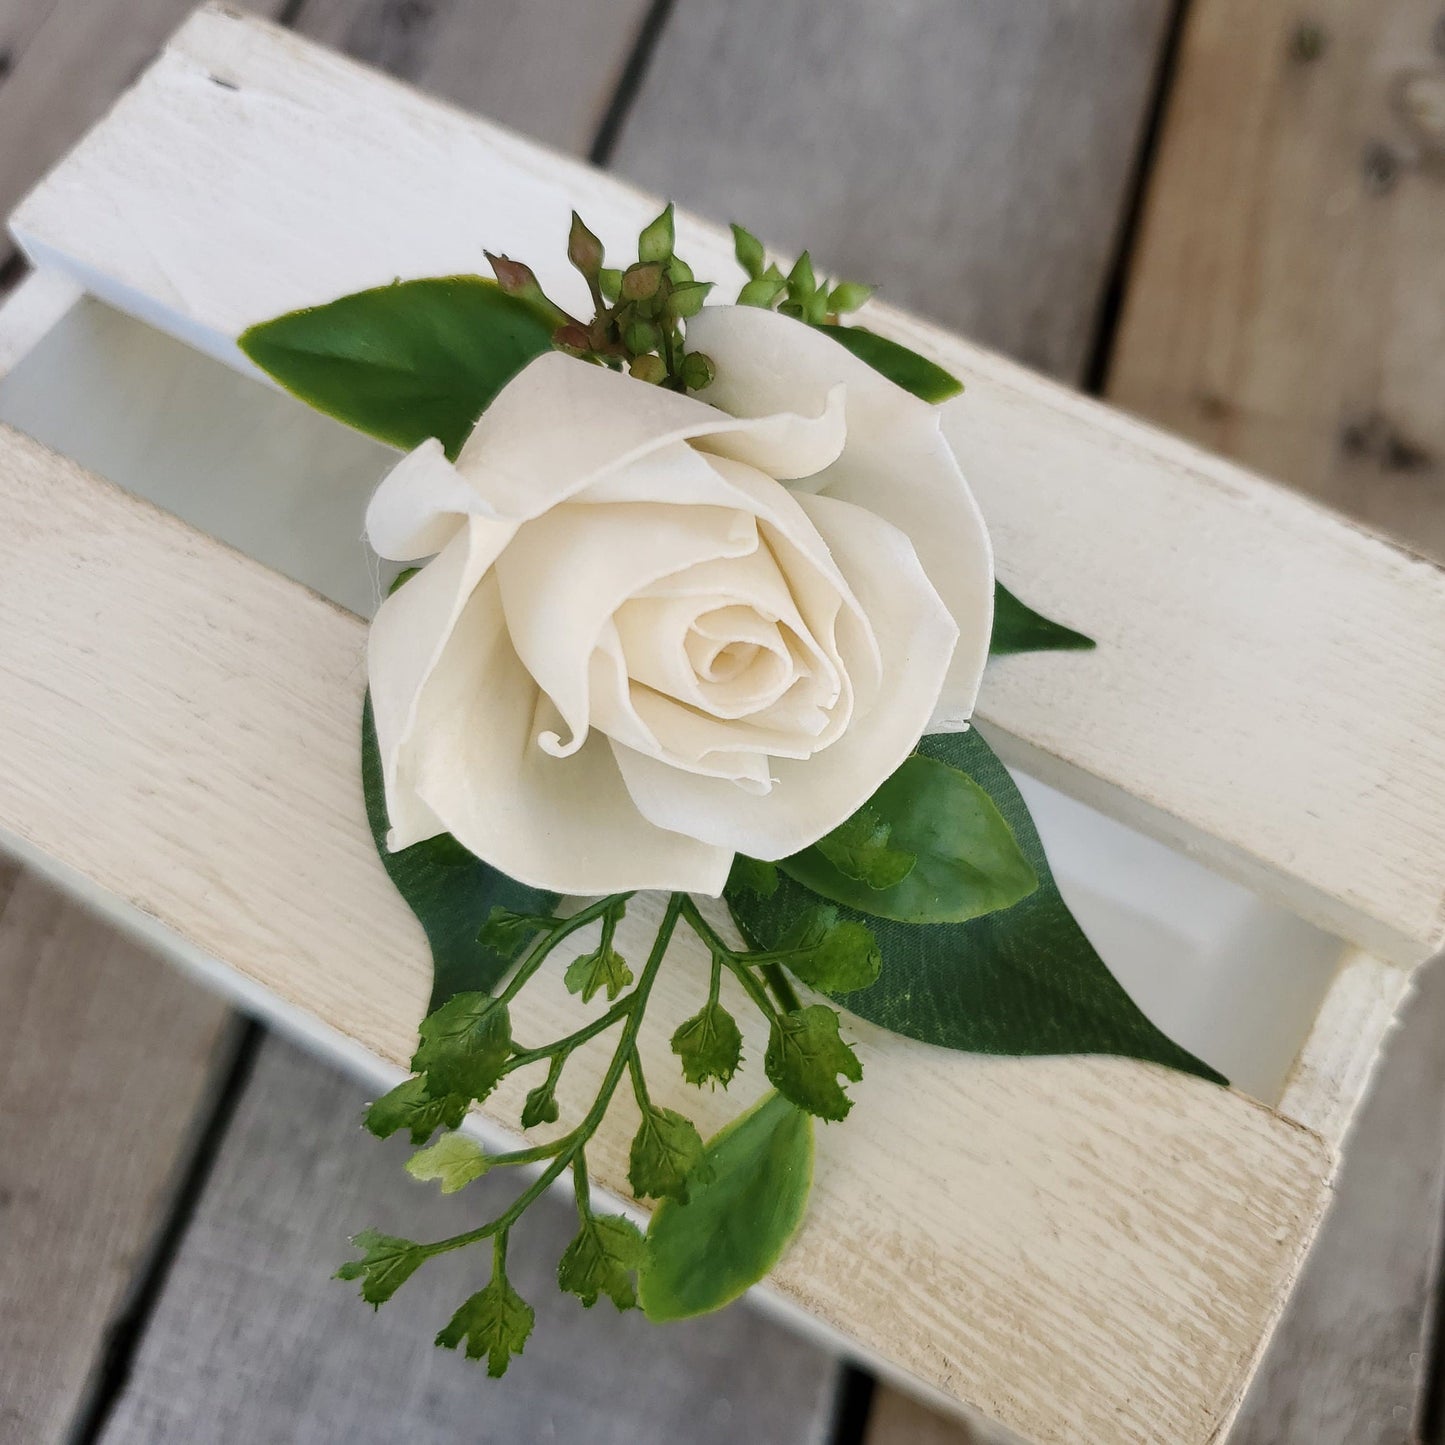 Wood Flower Boutonniere for Groom, Lapel Pin for Groom and Groomsmen, Groom flower, Wooden Flower for Jacket, Guy Wedding Flowers